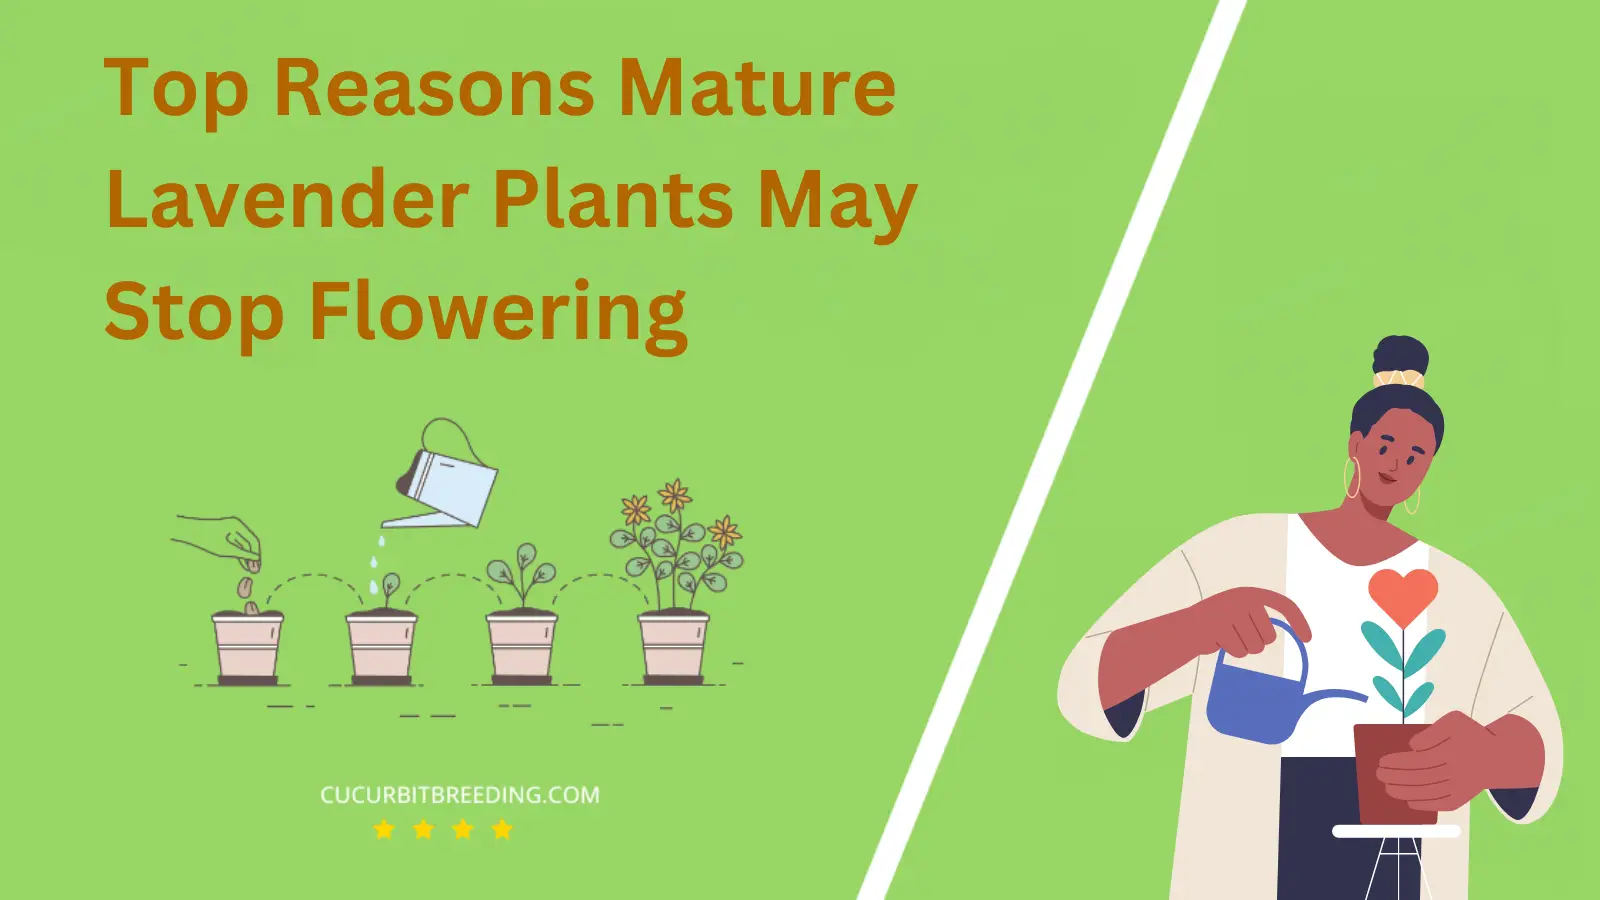 Top Reasons Mature Lavender Plants May Stop Flowering